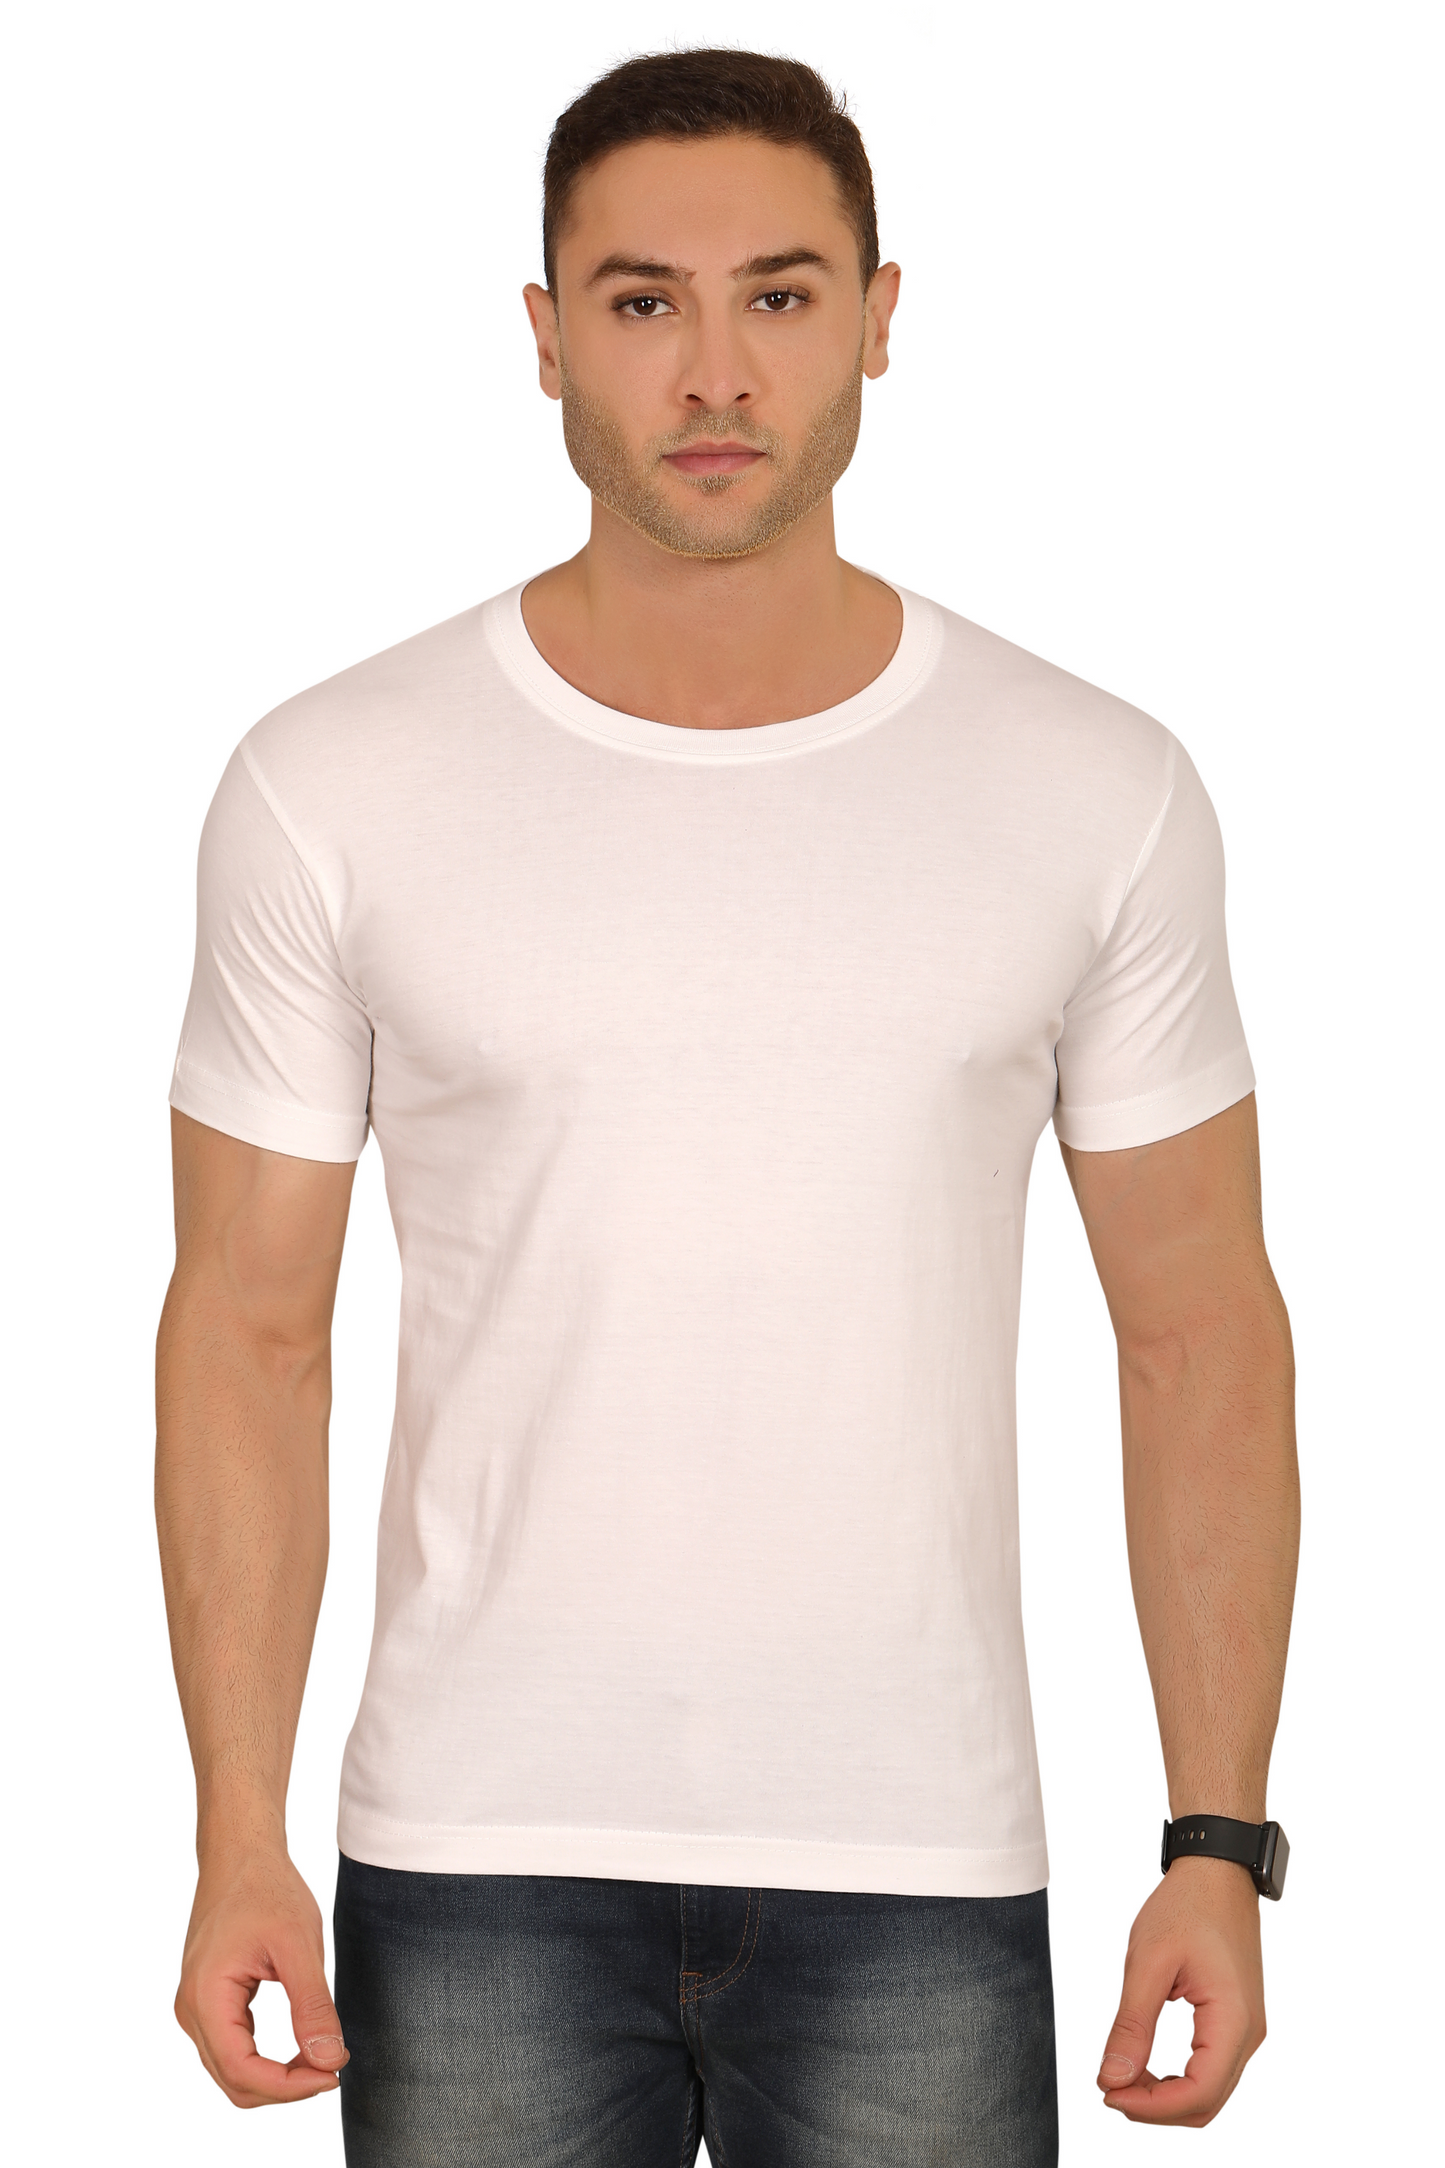 100% Cotton Men’s Half Sleeve T-Shirt - White